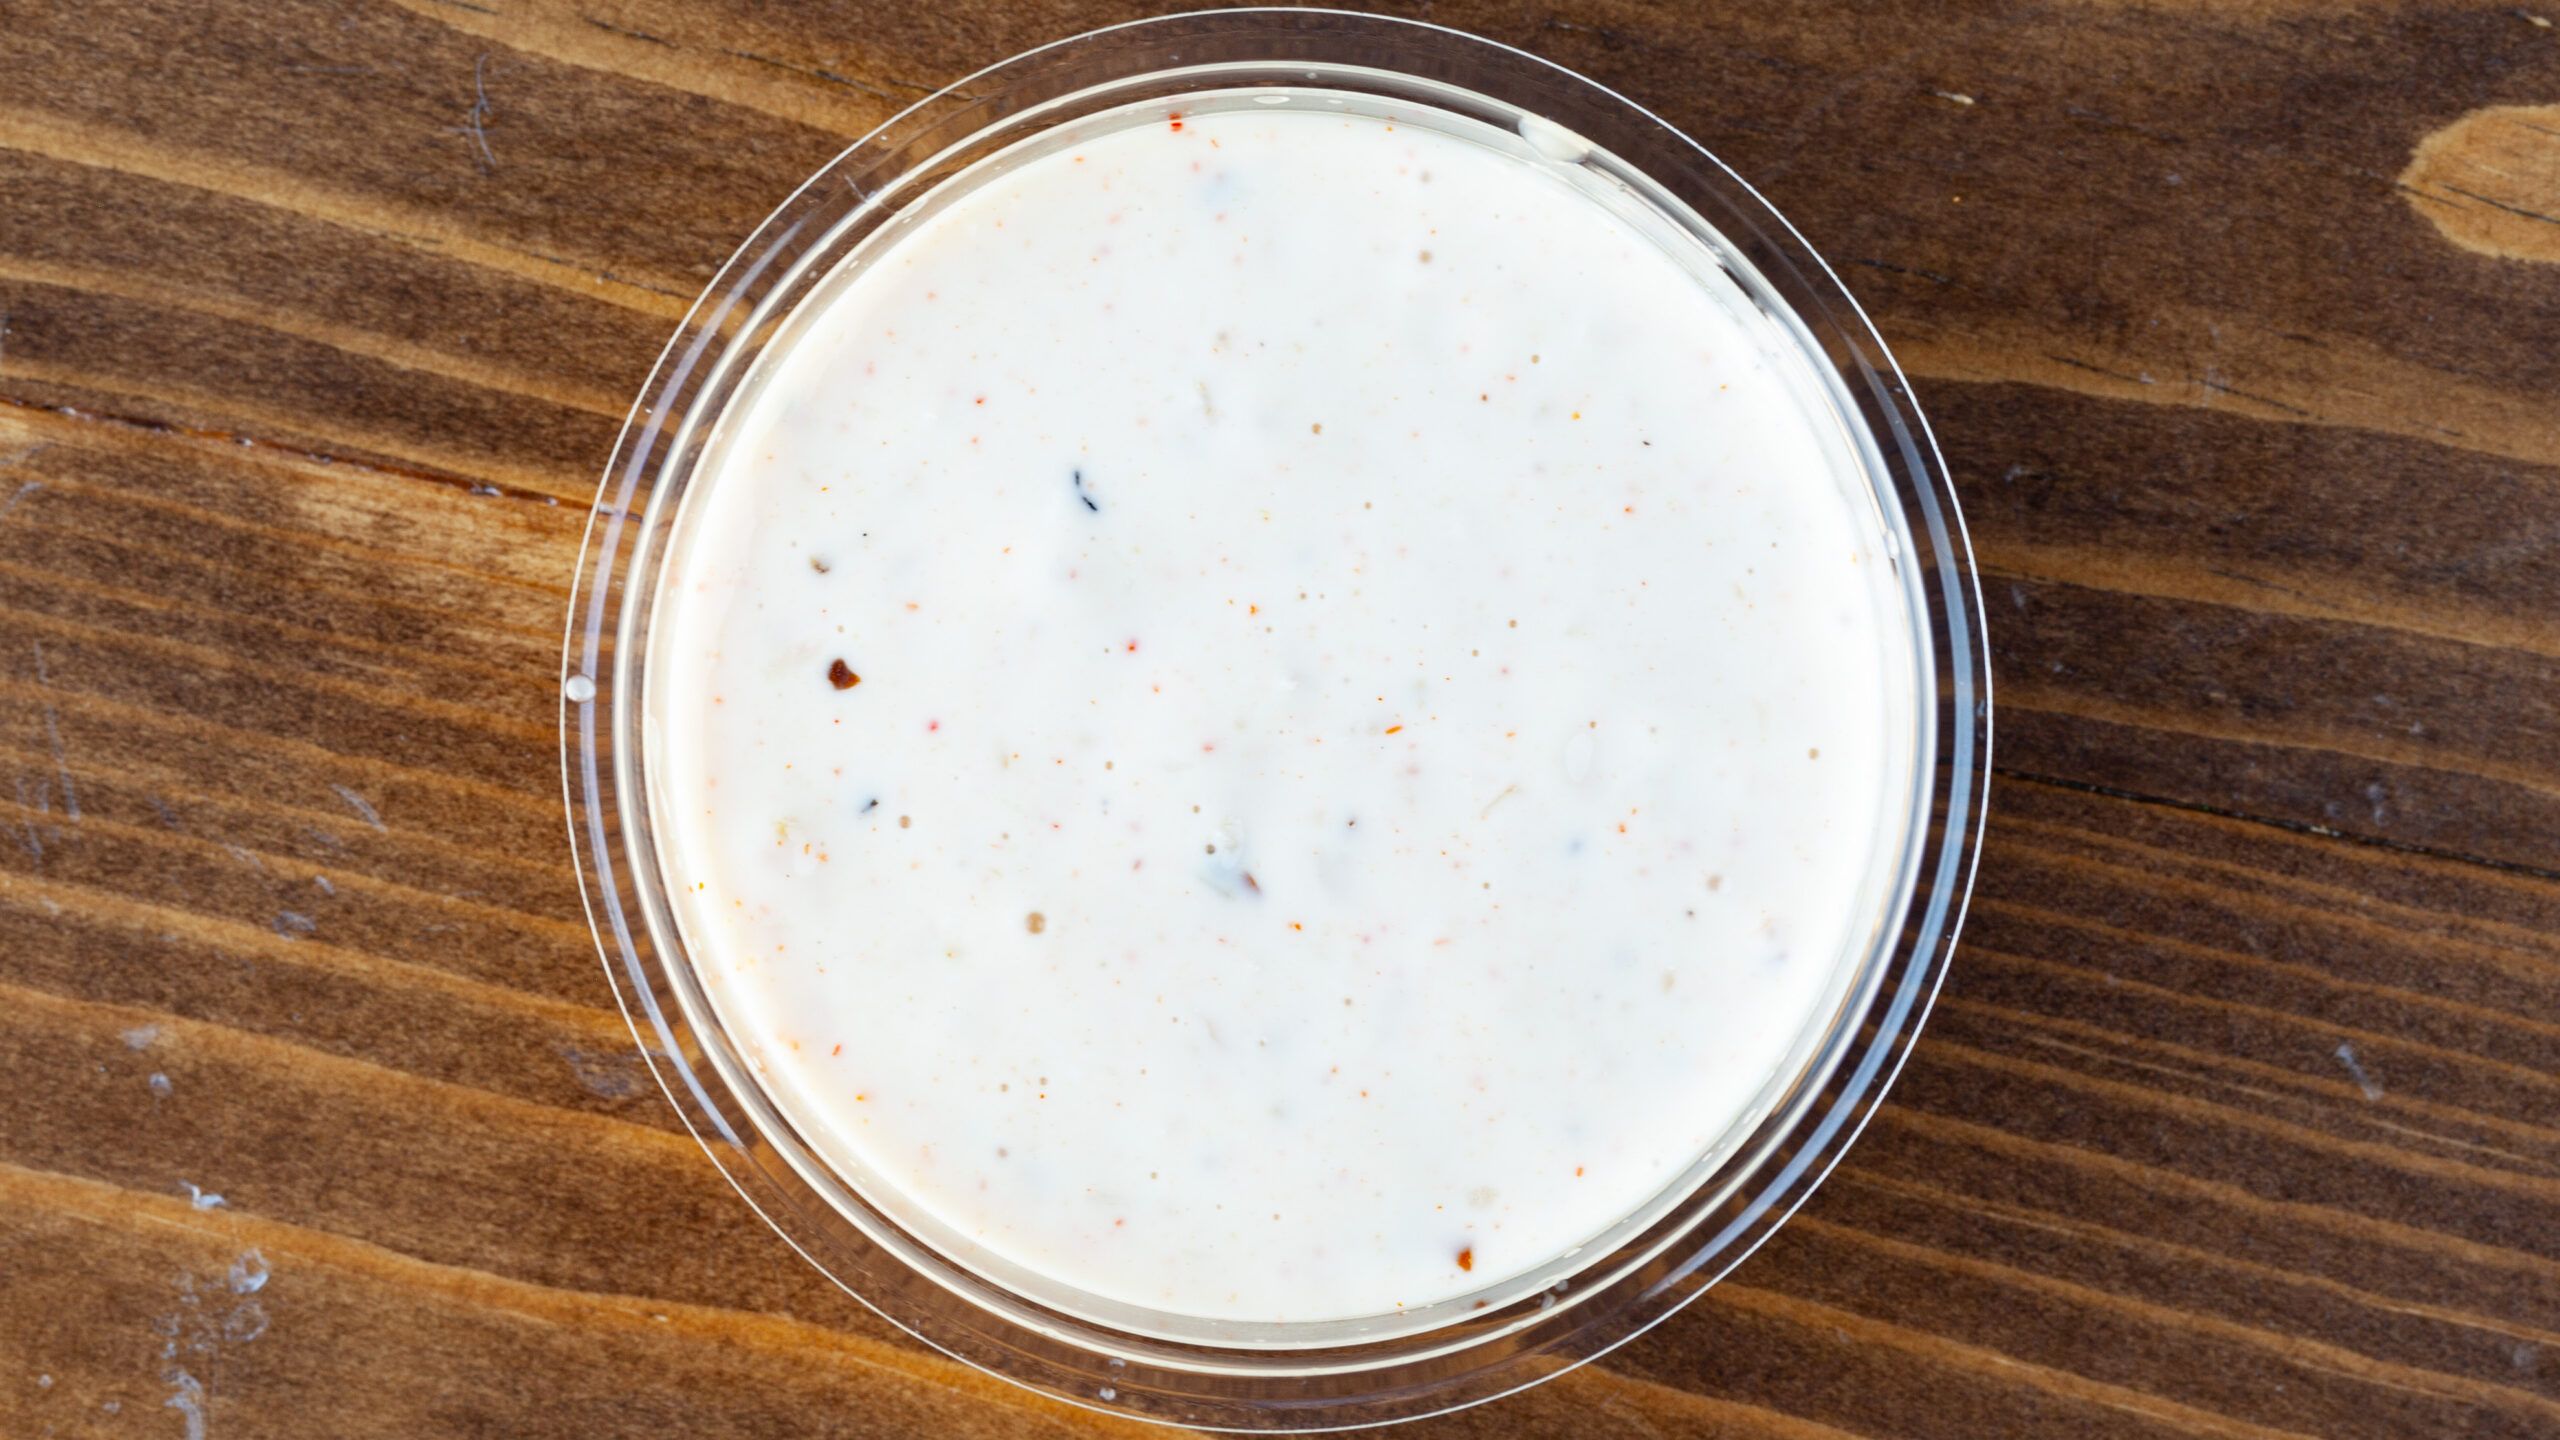 Prairie Dog Brewing Alabama-style white sauce